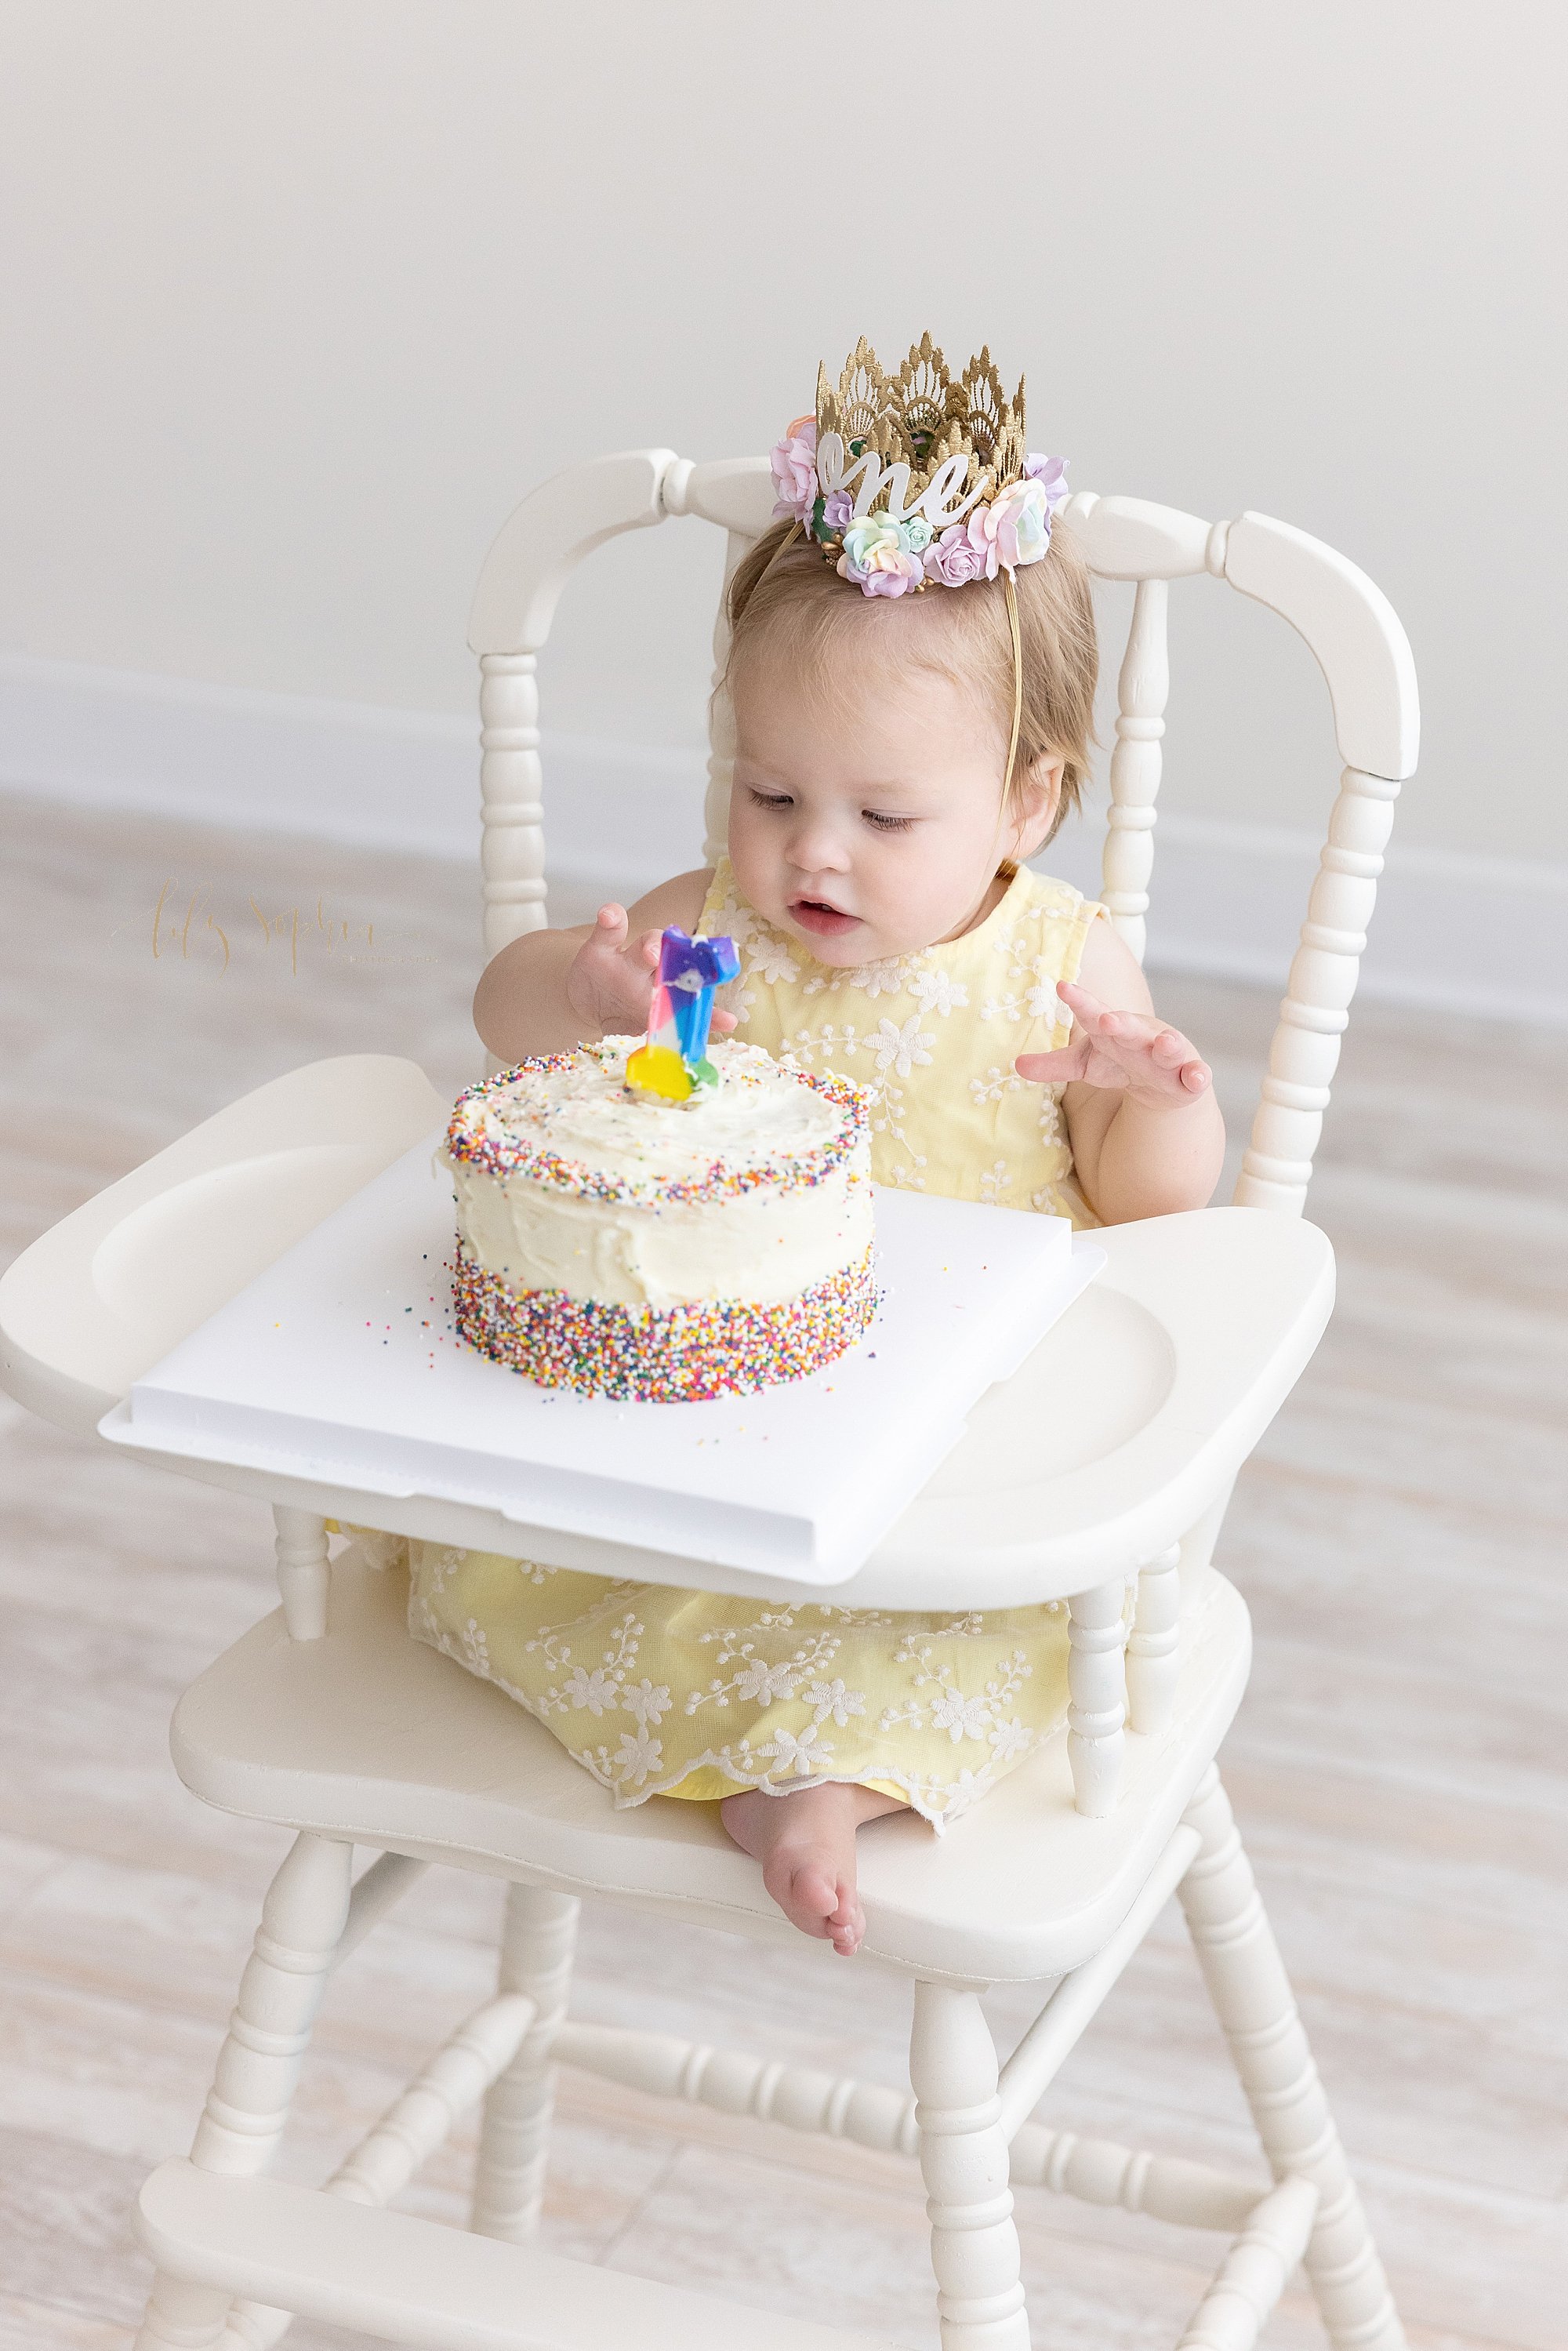 intown-atlanta-decatur-buckhead-brookhaven-studio-family-pictures-baby-girl-first-birthday-cake-smash-photoshoot_4132.jpg